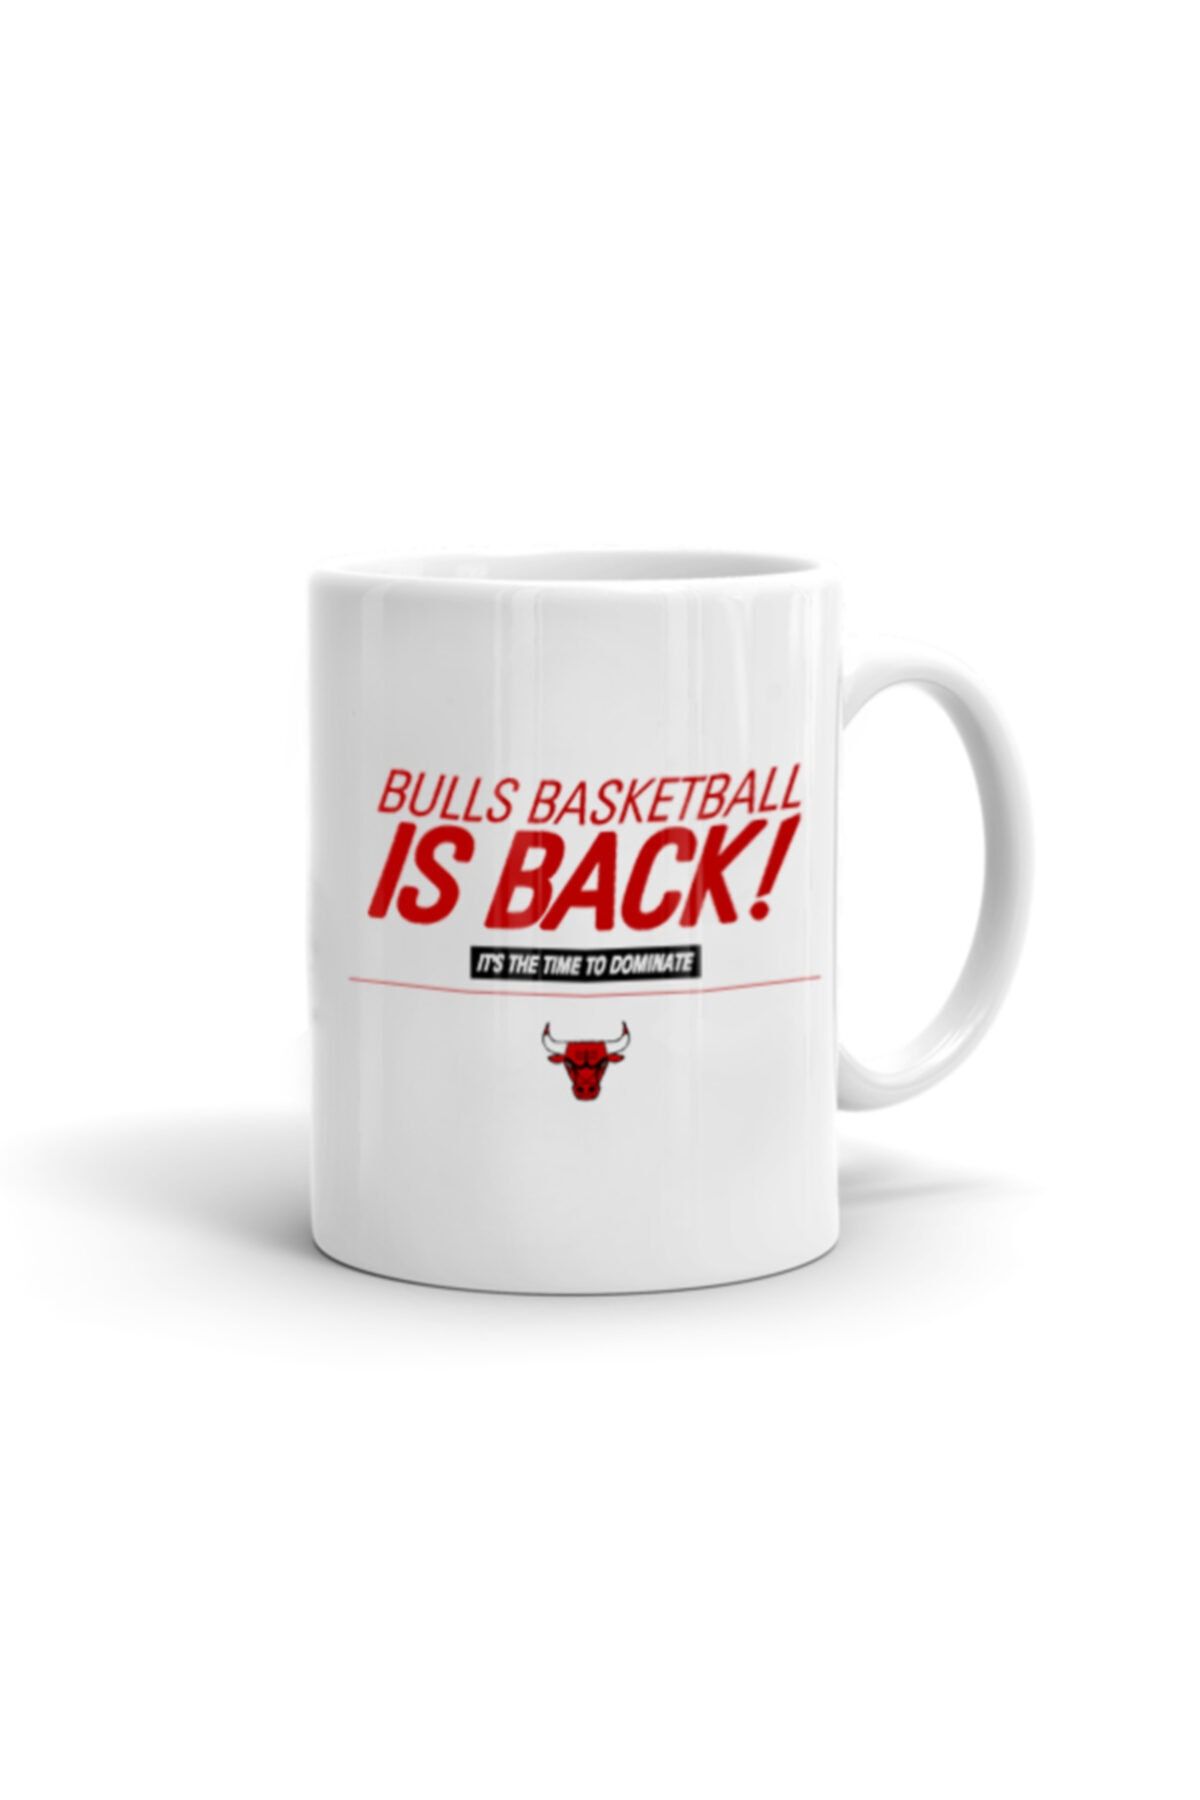 Usateamfans Bulls Basketball Is Back Mug